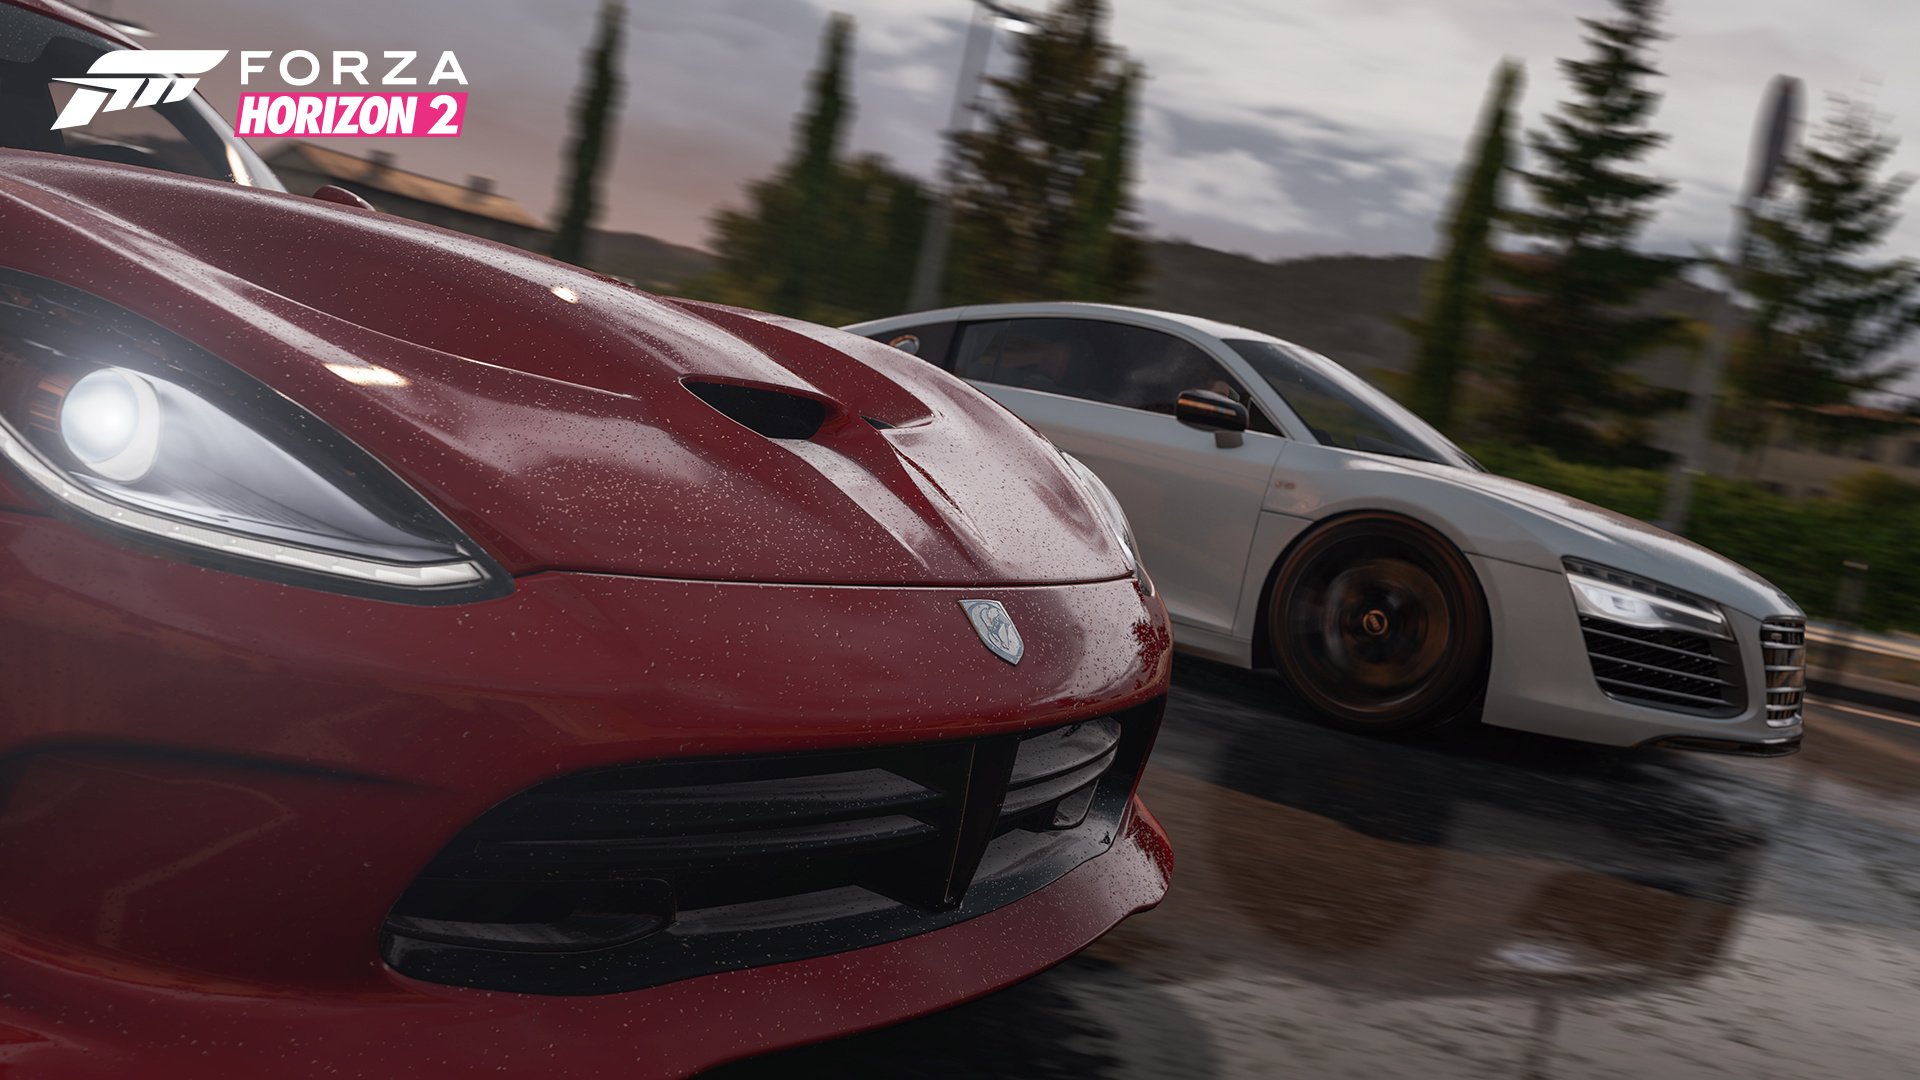 Forza Horizon 2 (Xbox One) review: Forza Horizon 2 is a car